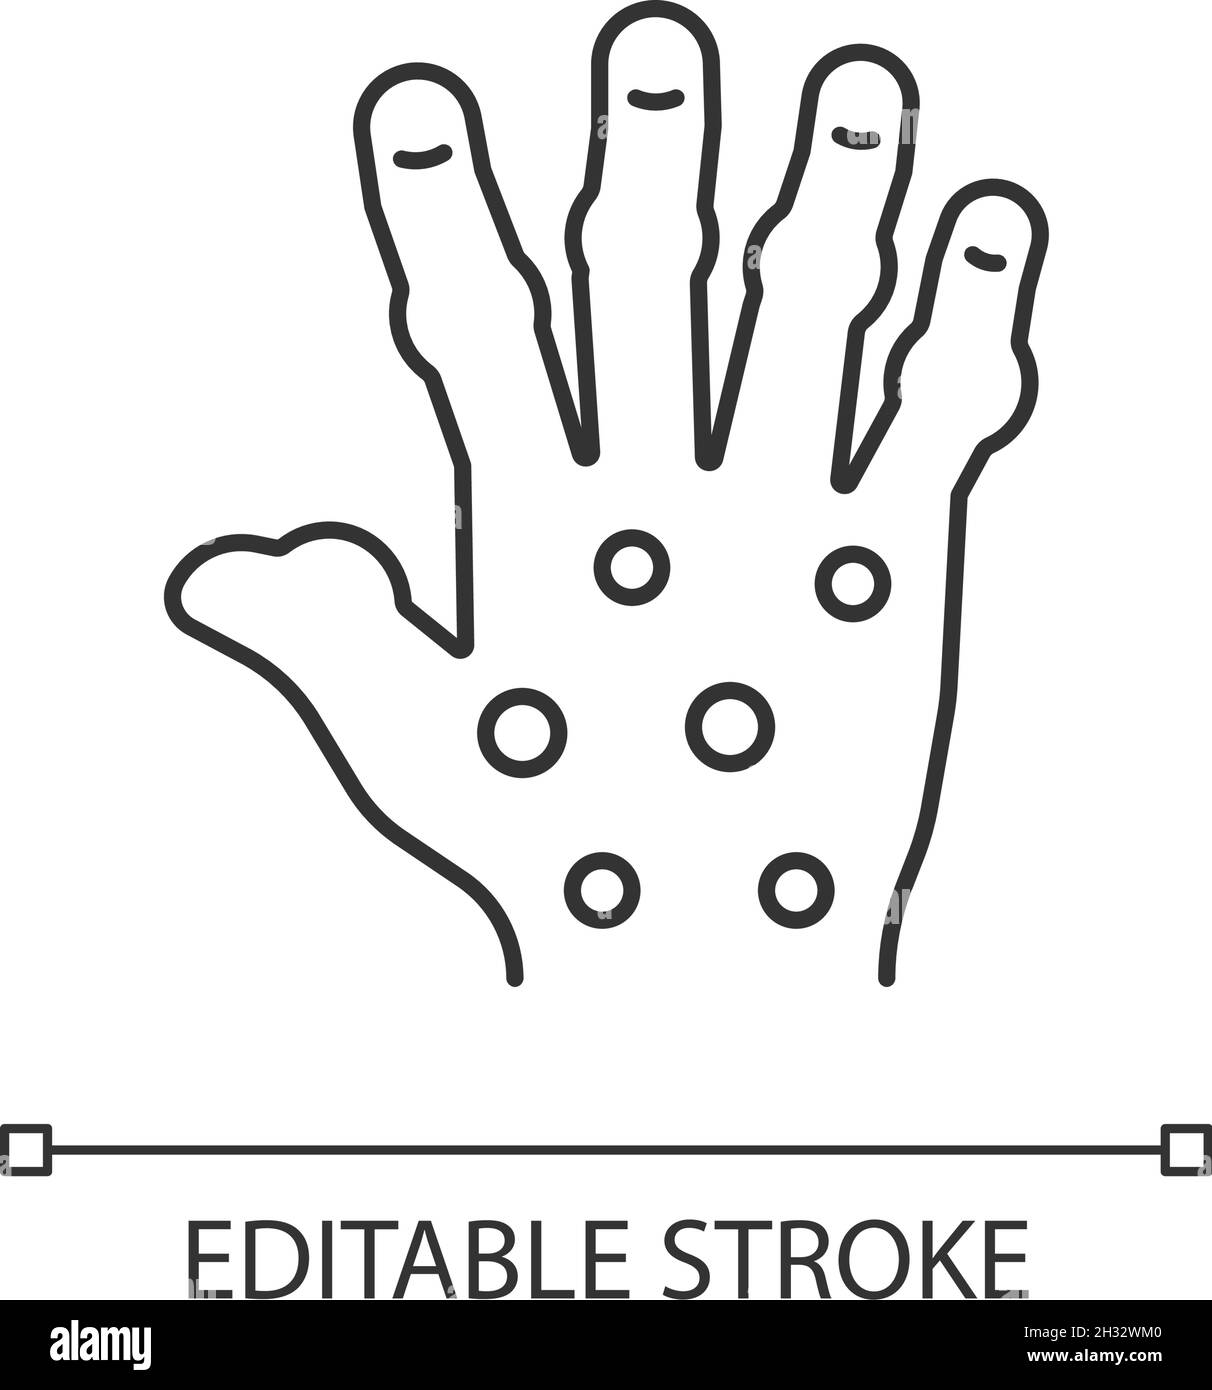 Rheumatoid arthritis drawing Stock Vector Images - Alamy